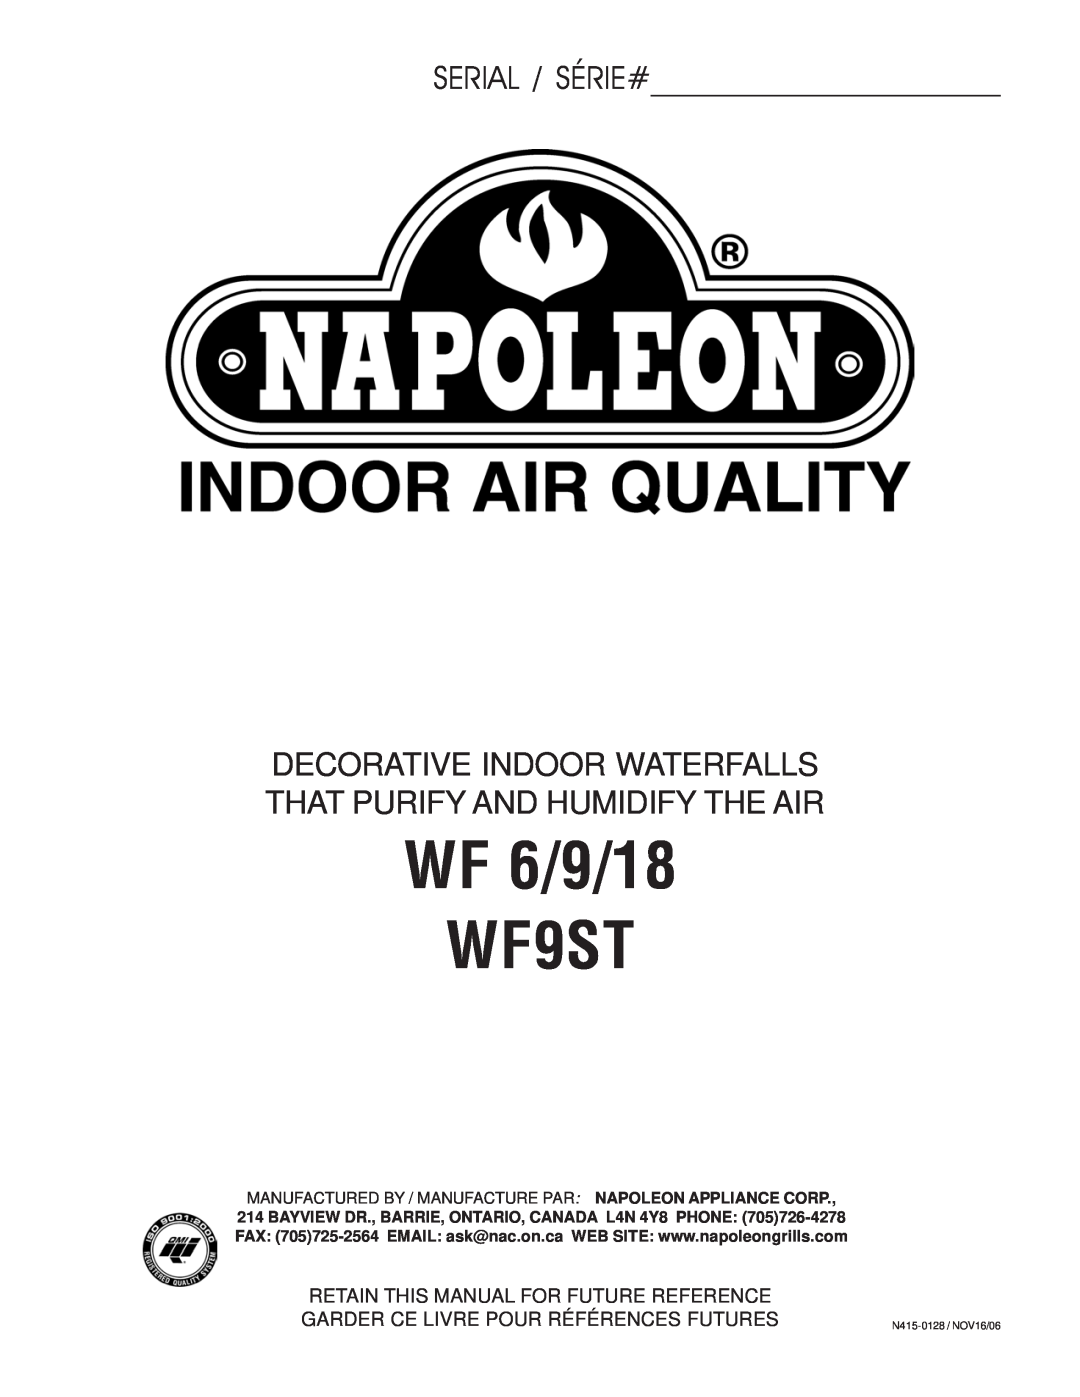 Napoleon Grills WF 18, WF 9 manual WF 6/9/18 WF9ST, Serial / Série#, Decorative Indoor Waterfalls, N415-0128 /NOV16/06 